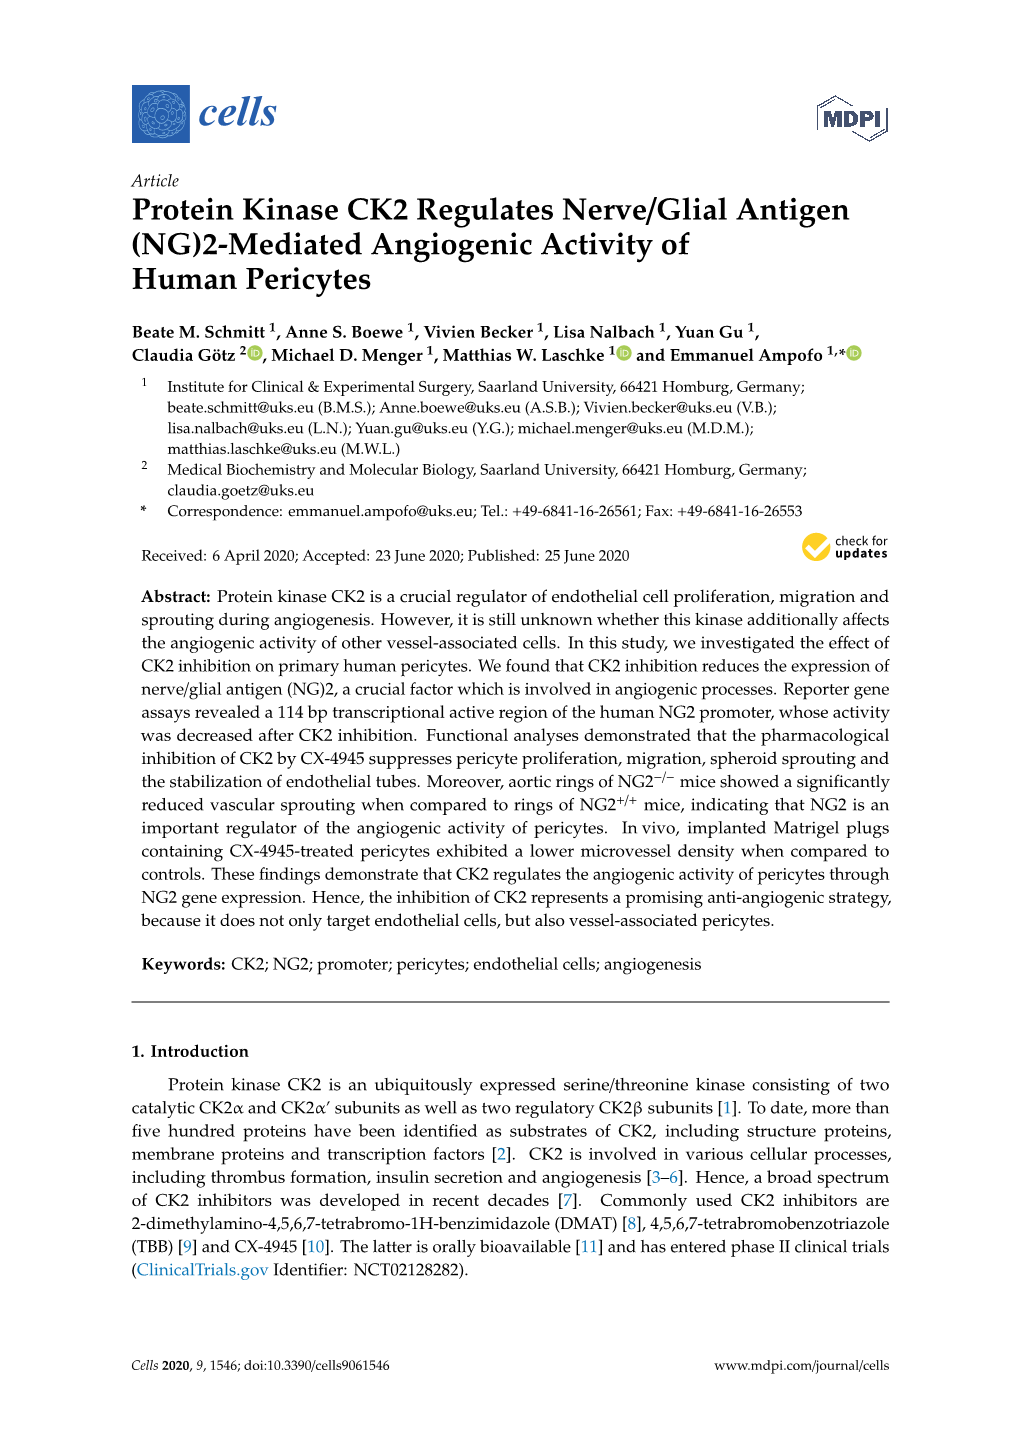 (NG)2-Mediated Angiogenic Activity of Human Pericytes